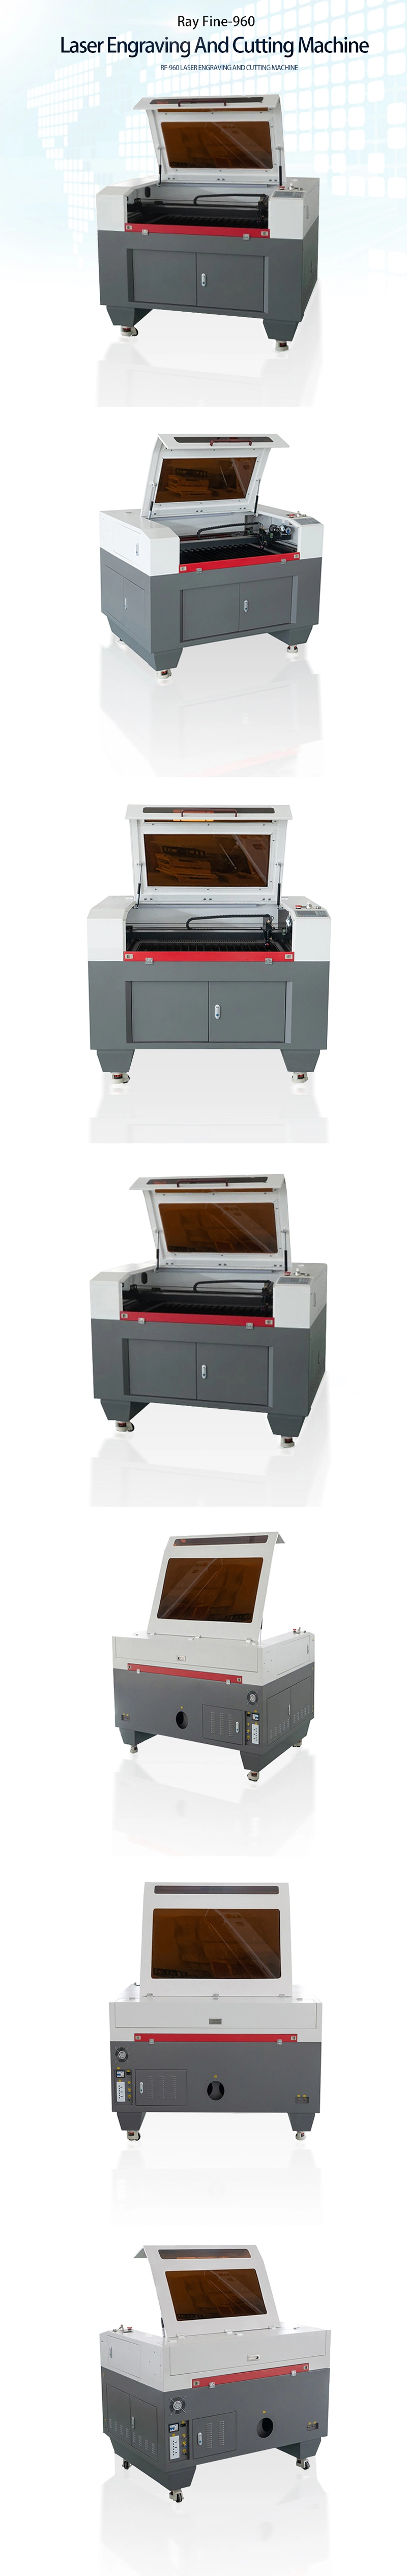 Rayfine 600mm*900 mm Mini Laser Cutting 6090 Machine/60W CO2 Laser Engraving and Cutting Machine